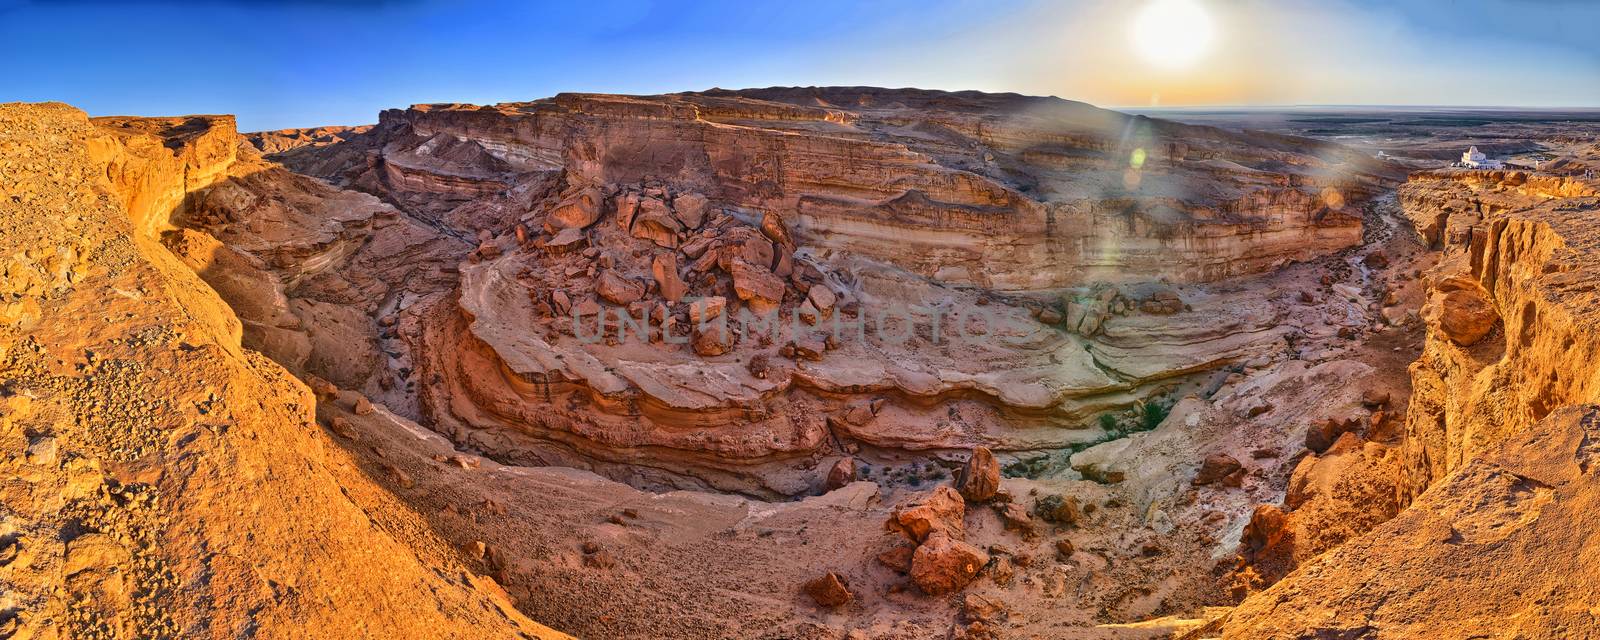 Tamerza canyon or Star Wars canyon, Sahara desert, Tunisia, Africa, HDR Panorama